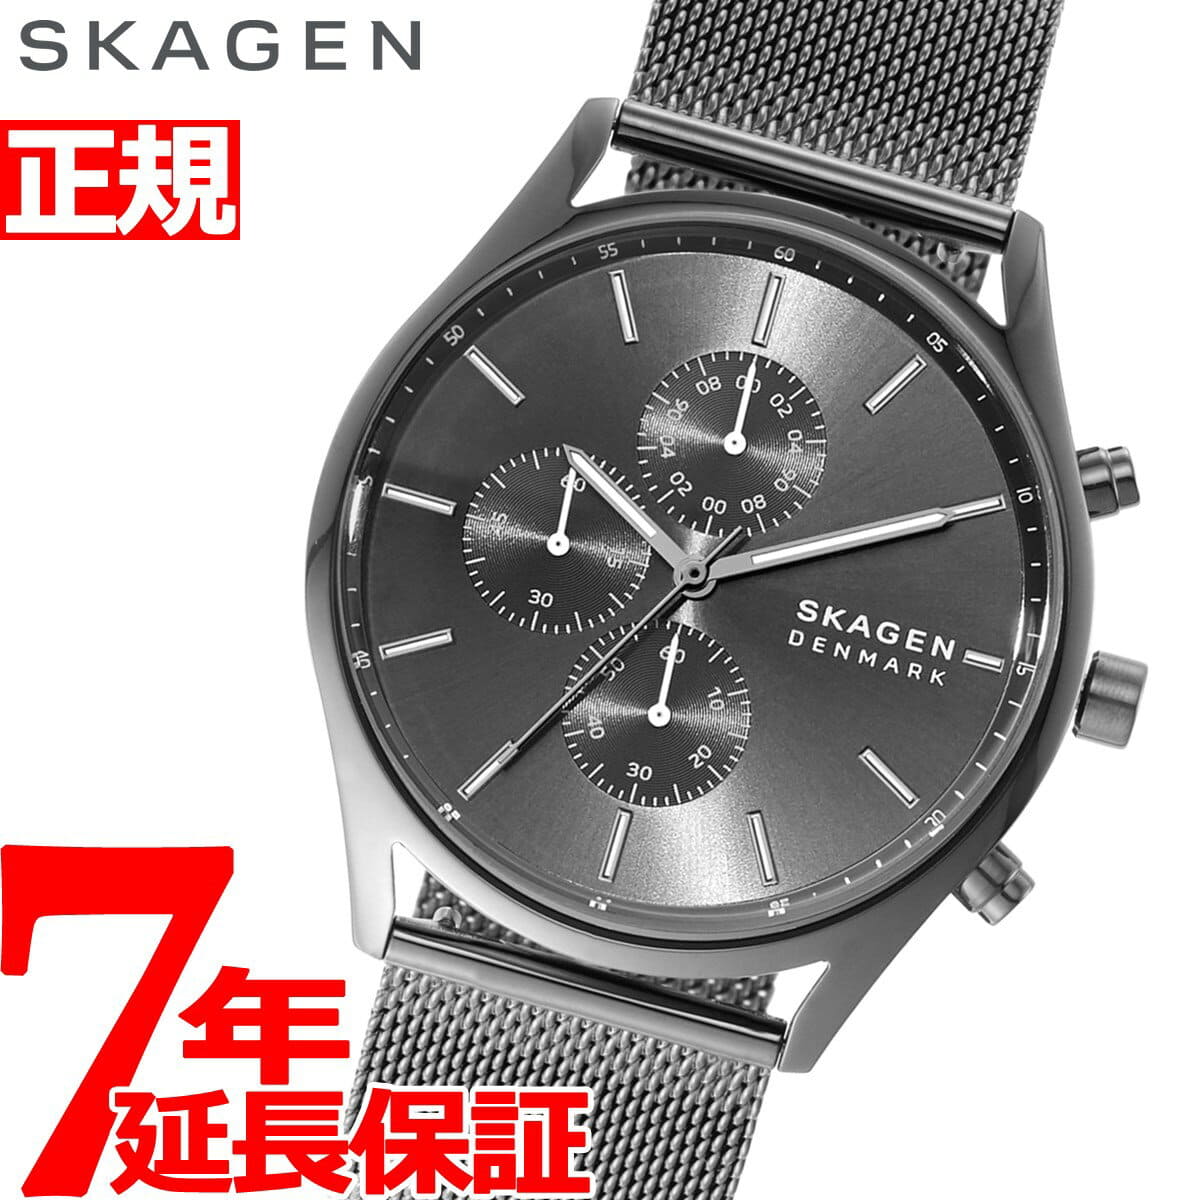 New]SKAGEN HOLST Men\'s Chronograph Watch SKW6608 - BE FORWARD Store